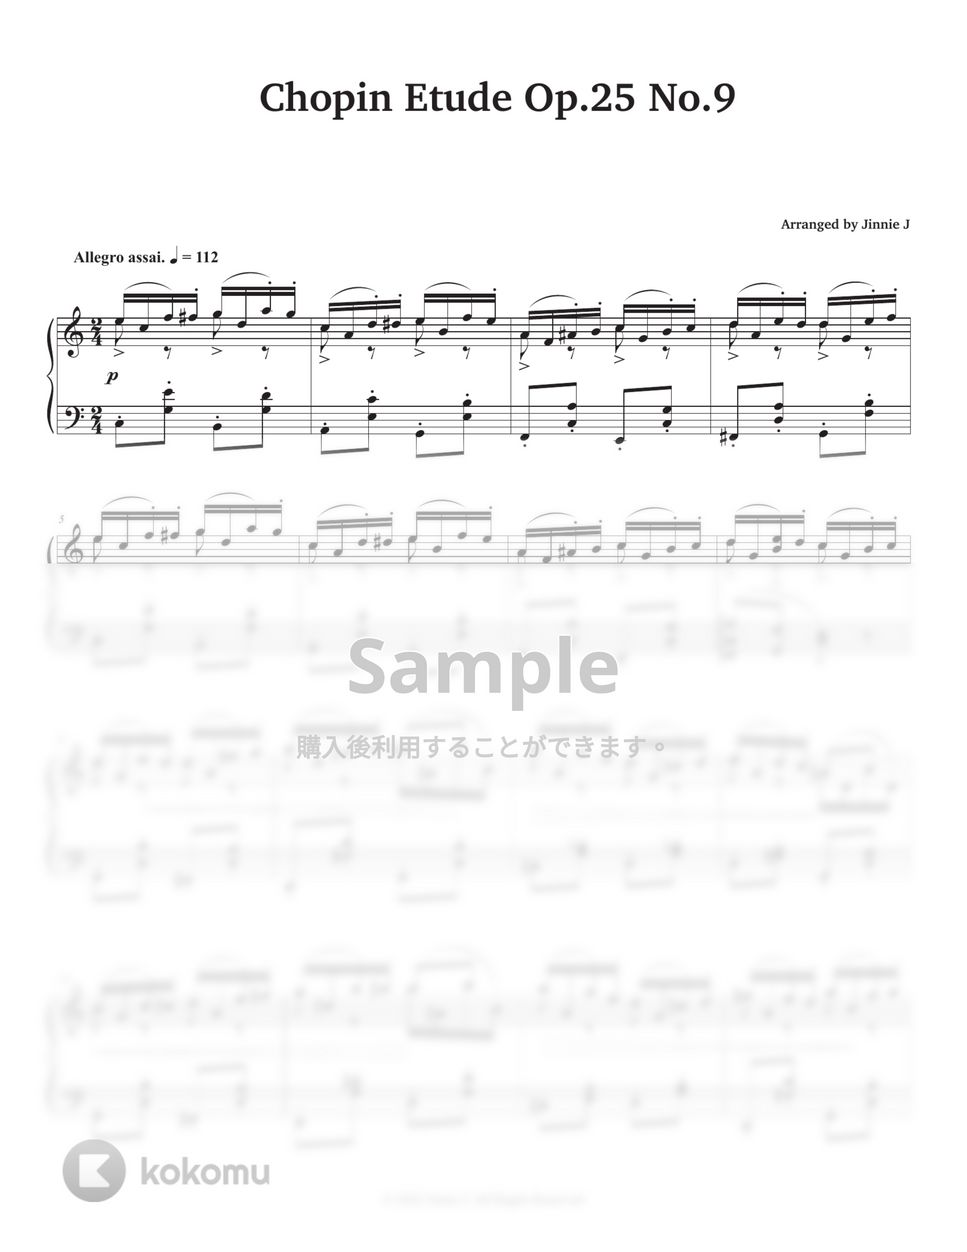 F. Chopin - Chopin Etude Op.25 No.9 (Butterfly) (中級, C key) by Jinnie J